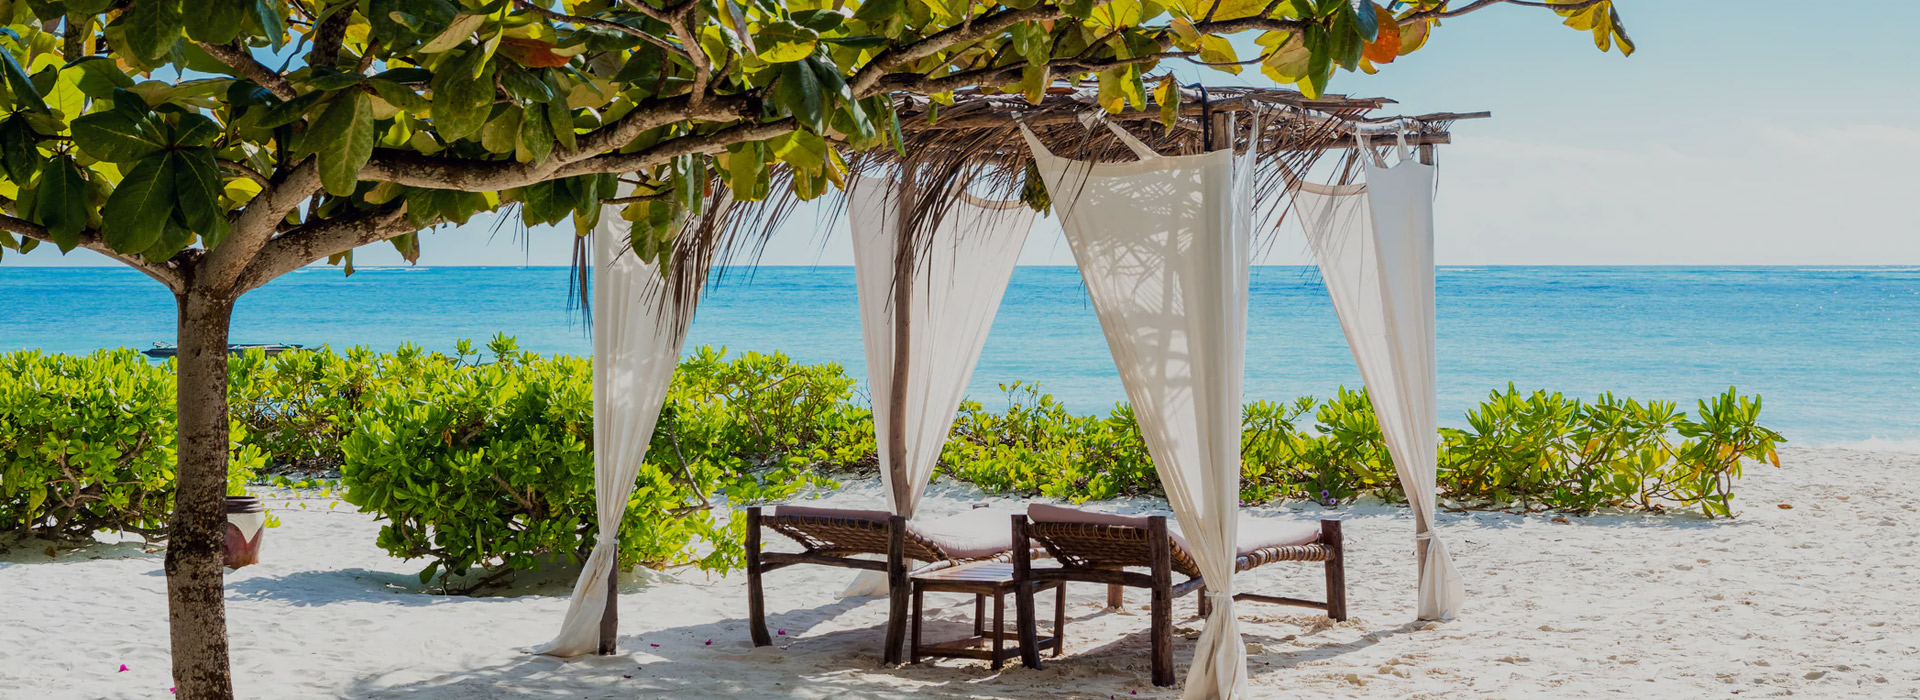 7 Days Beach Honeymoon In Zanzibar